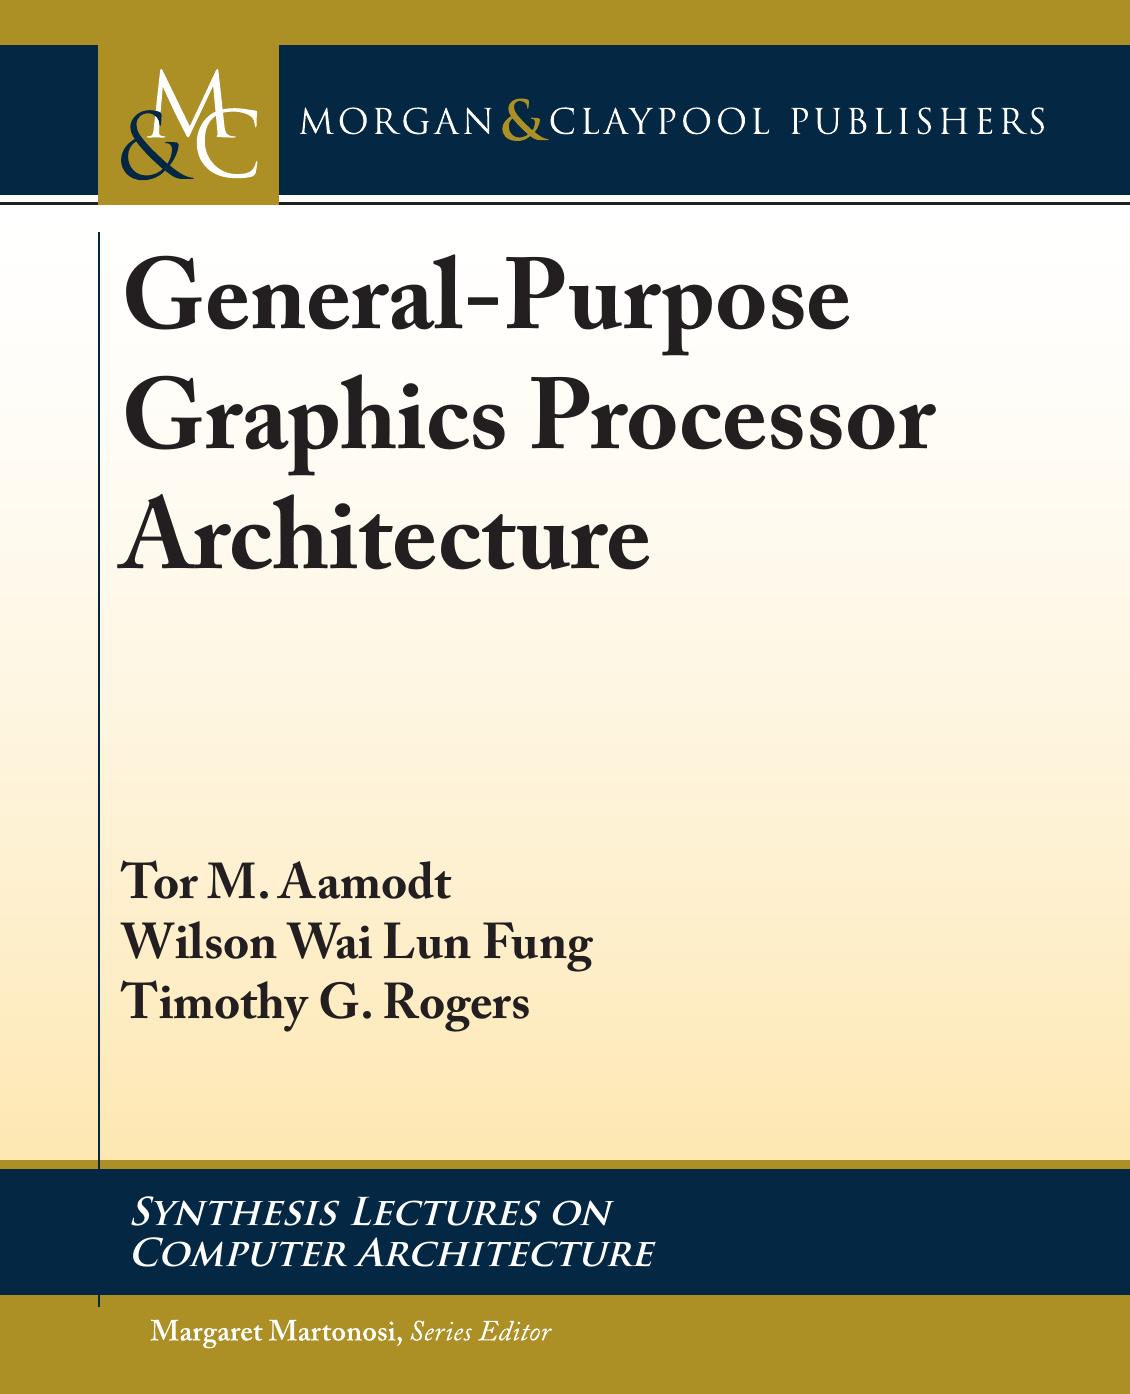 General-purpose graphics processor architectures2018